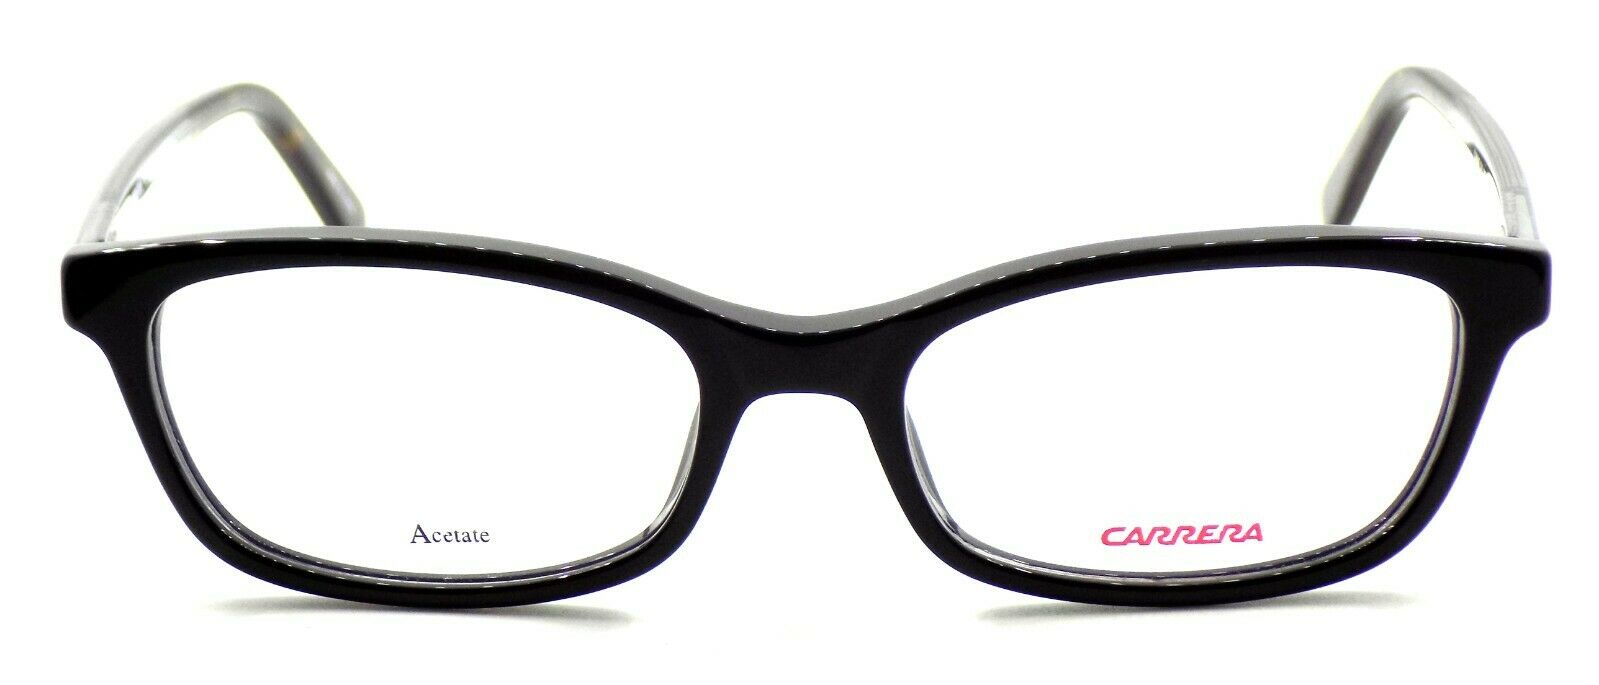 2-Carrera CA6647 3L3 Women's Eyeglasses Frames 50-17-140 Black + CASE-762753669971-IKSpecs